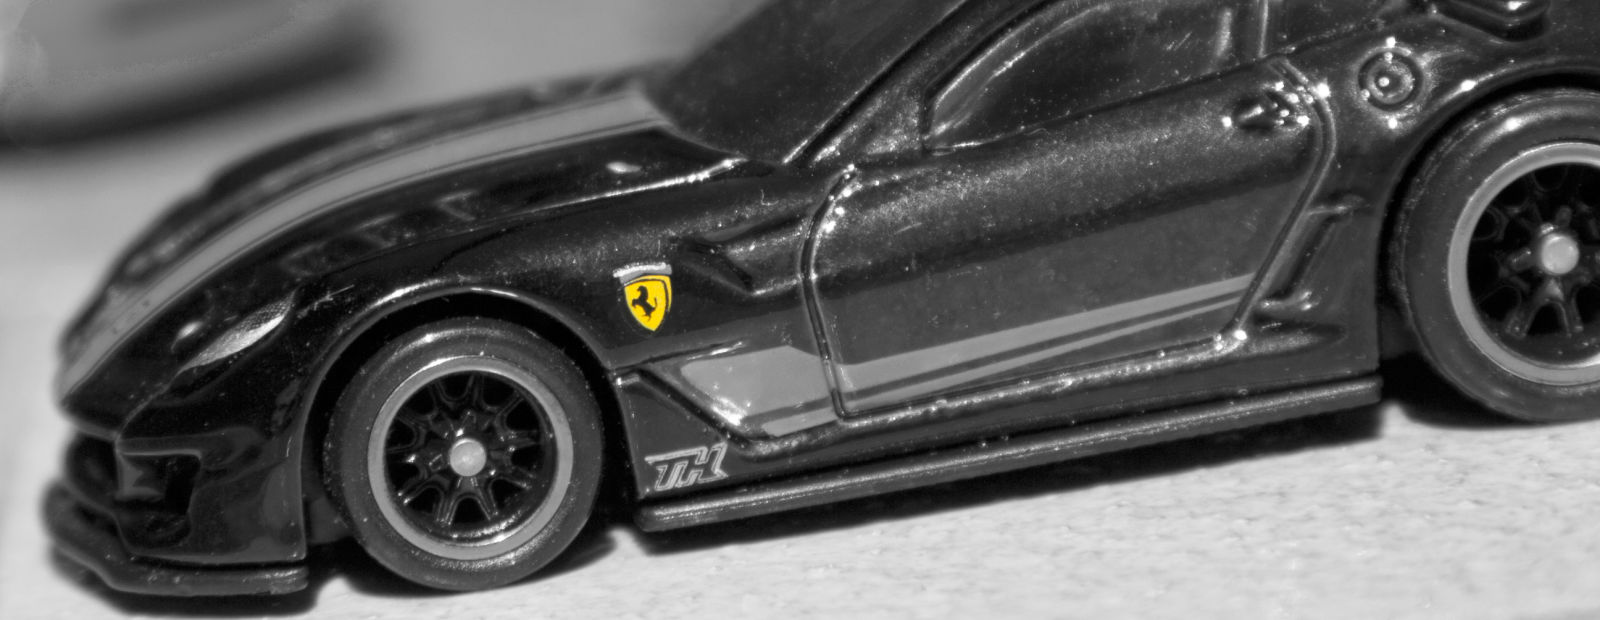 Illustration for article titled Ferrari Friday Photoshoot